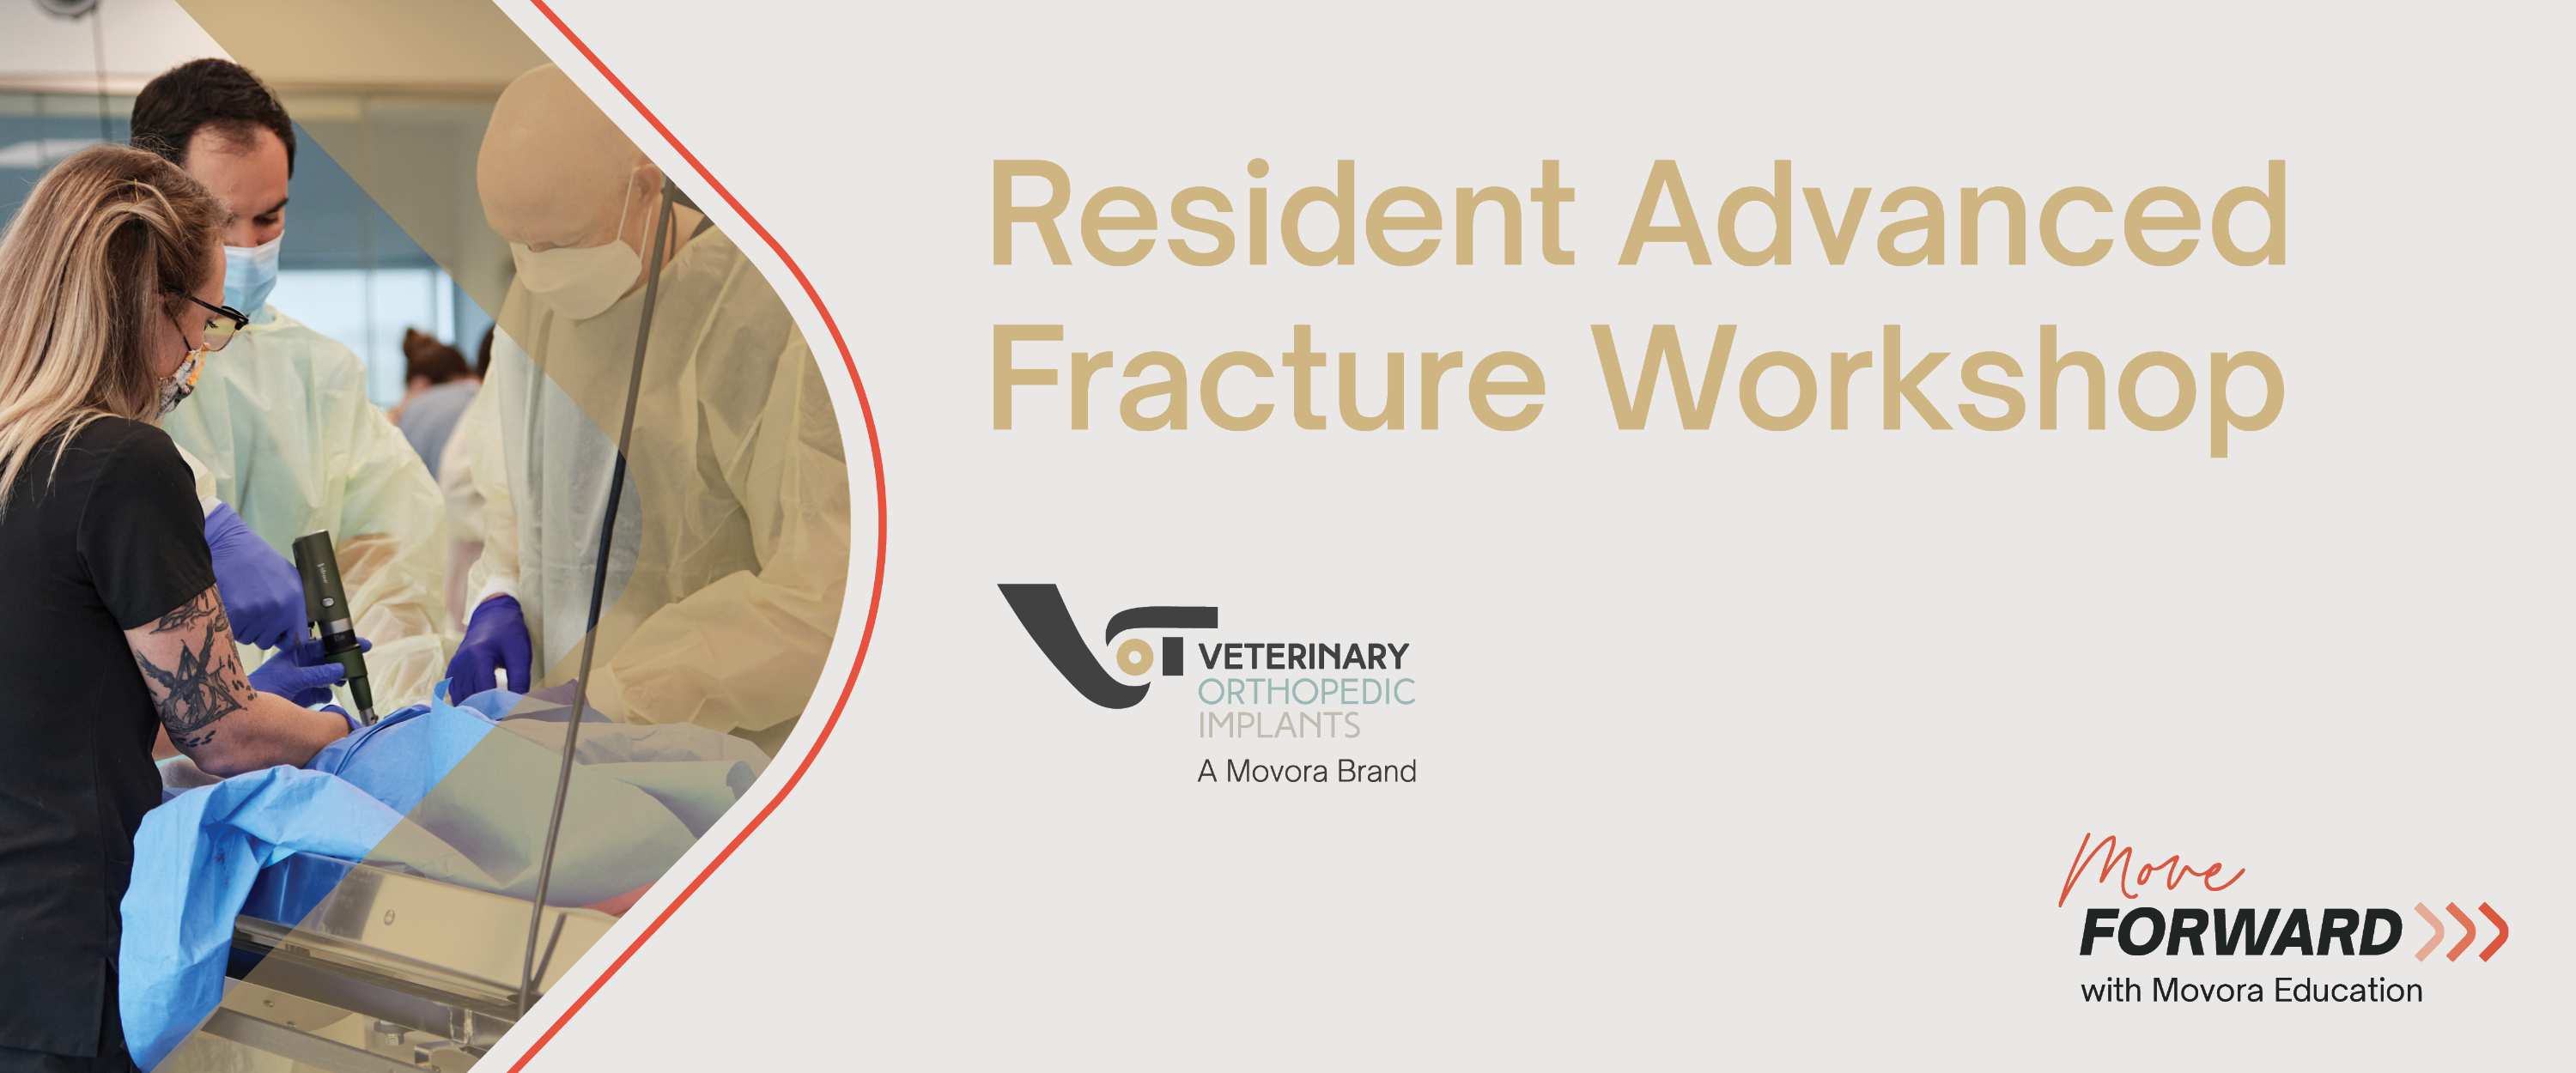 Residents Advanced Fracture Workshop banner